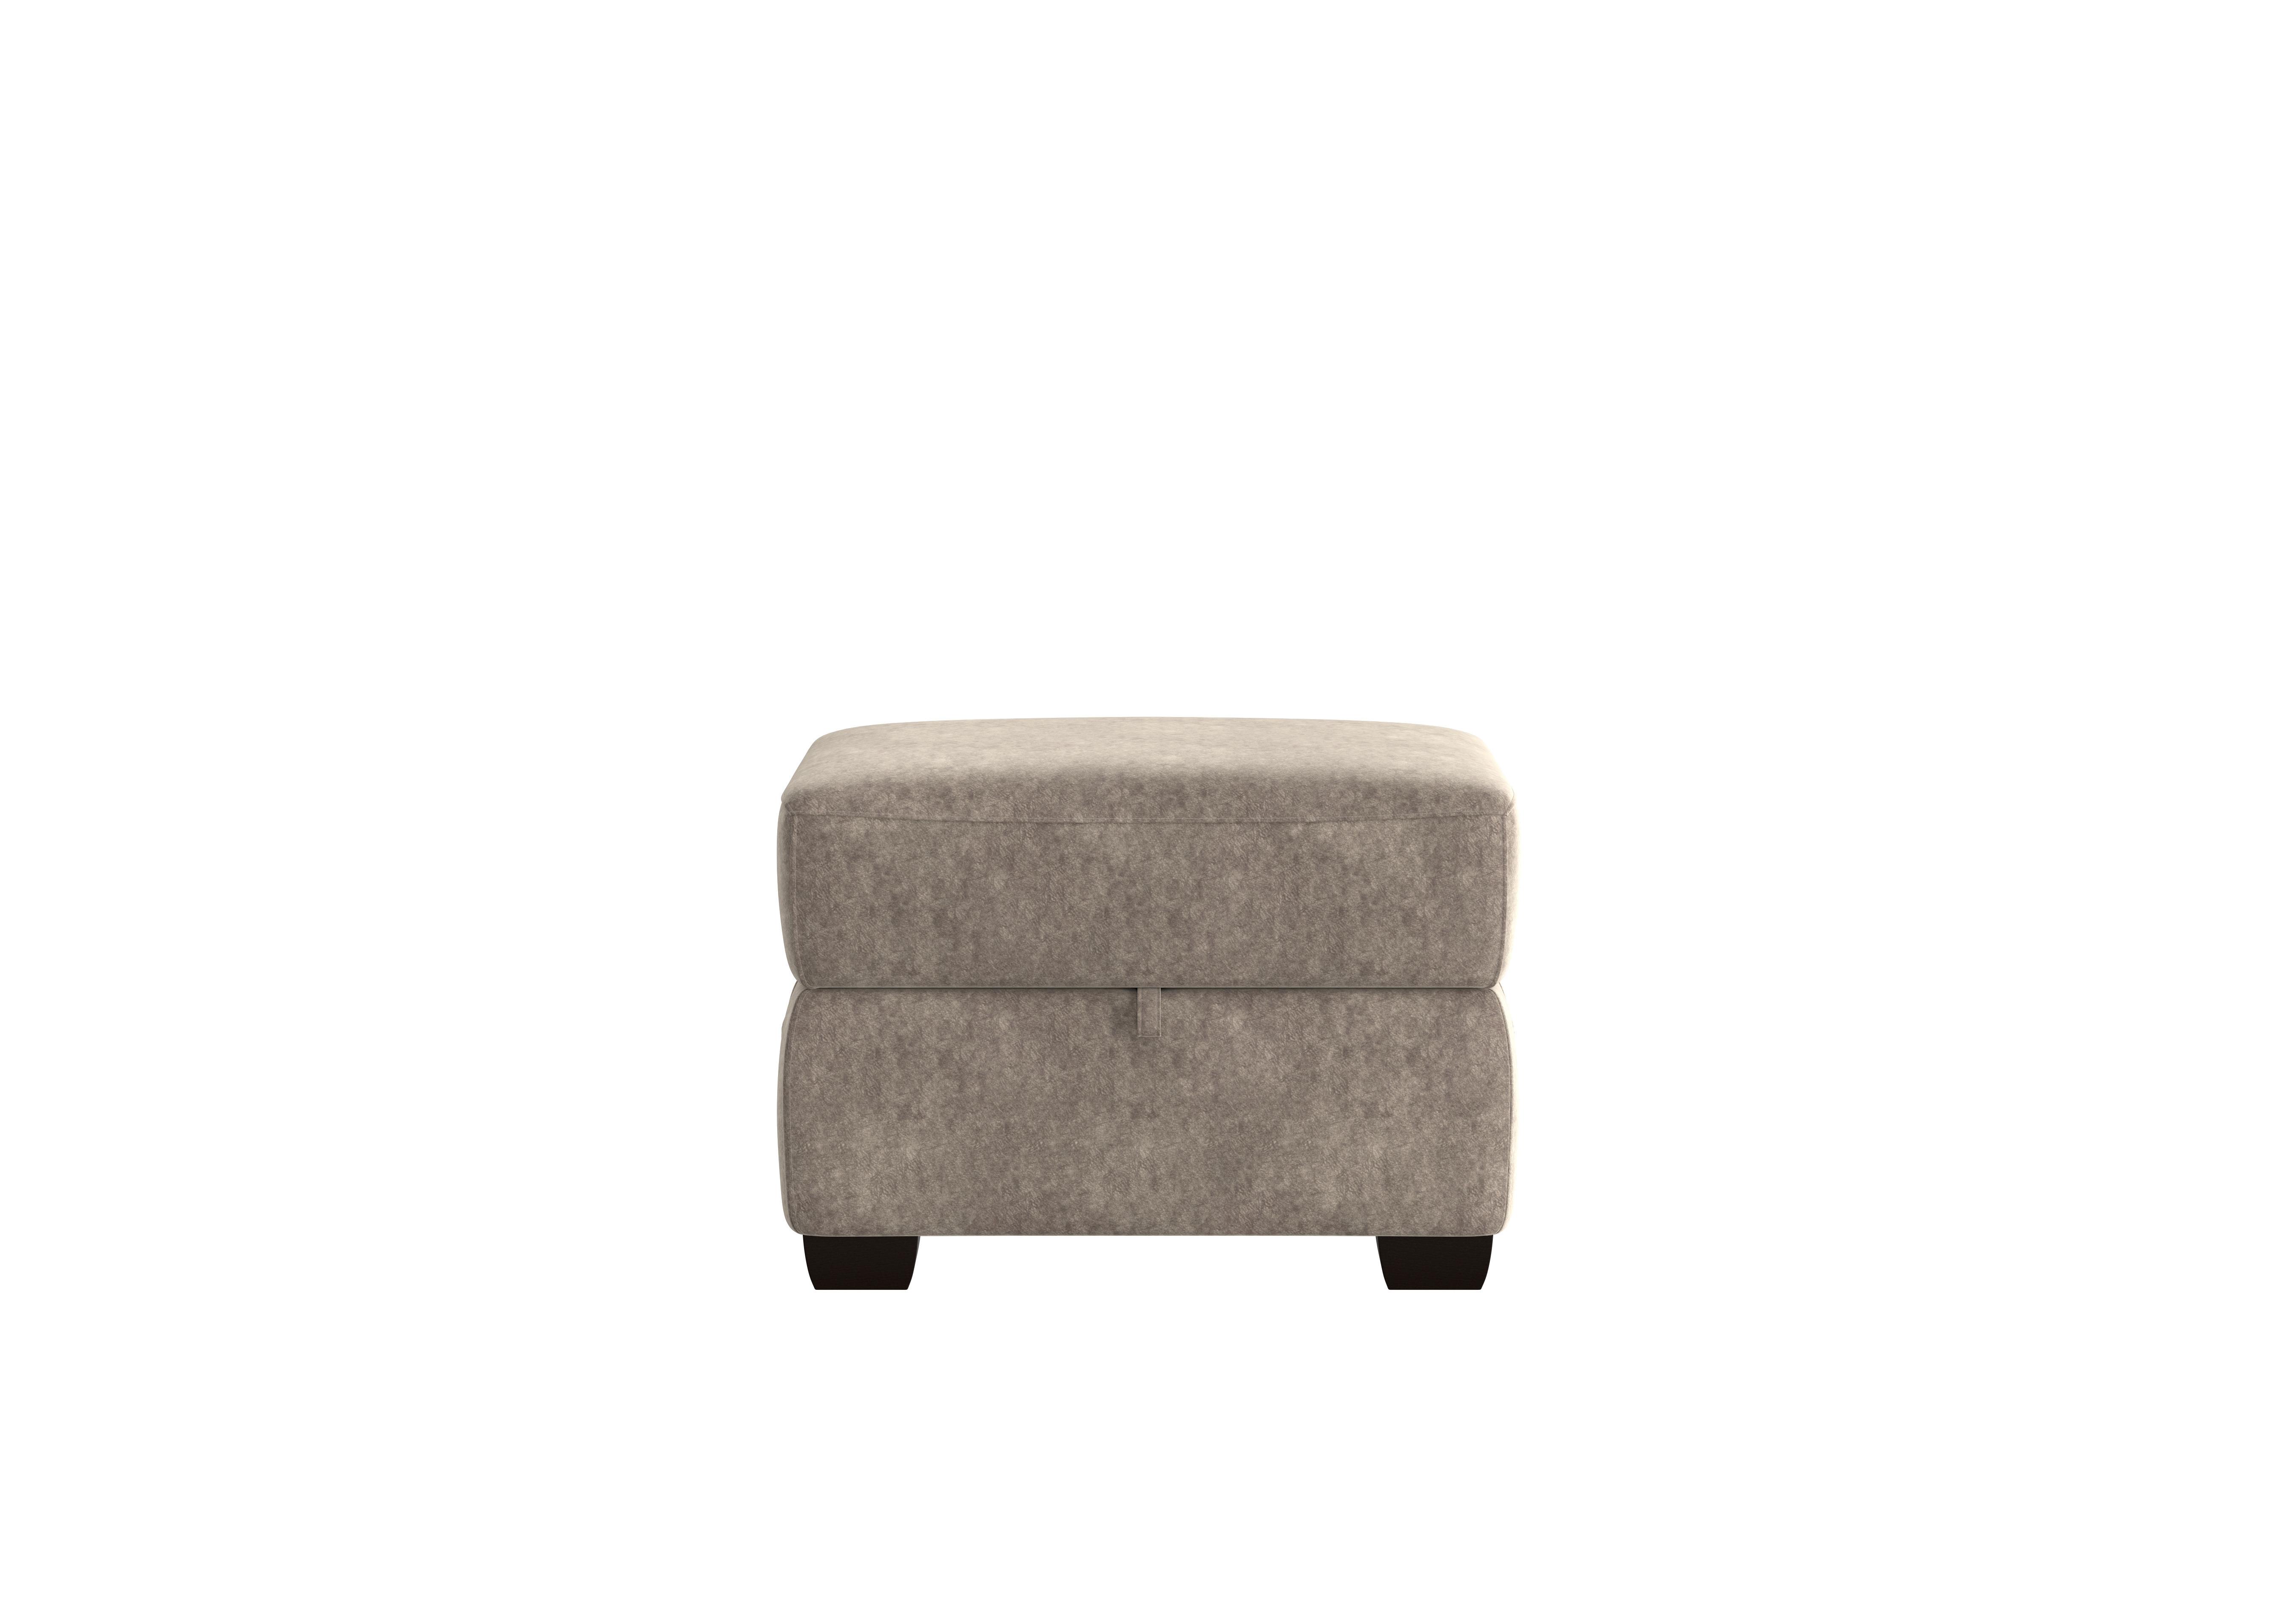 Cozee Fabric Storage Footstool in Bfa-Bnn-R29 Fv1 Mink on Furniture Village